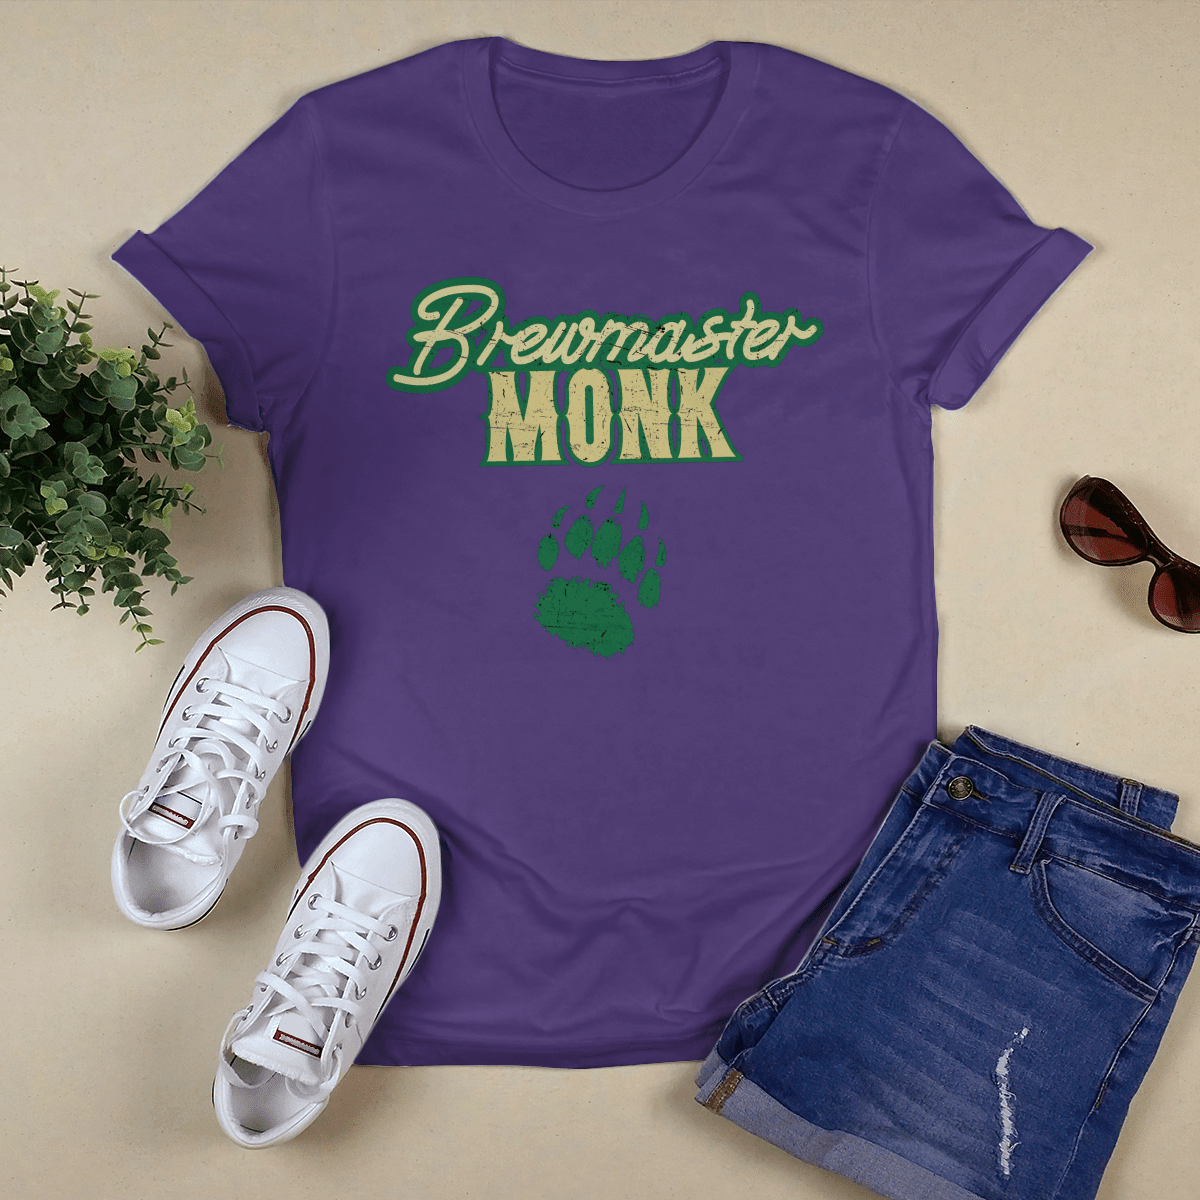 Brewmaster Monk Shirt